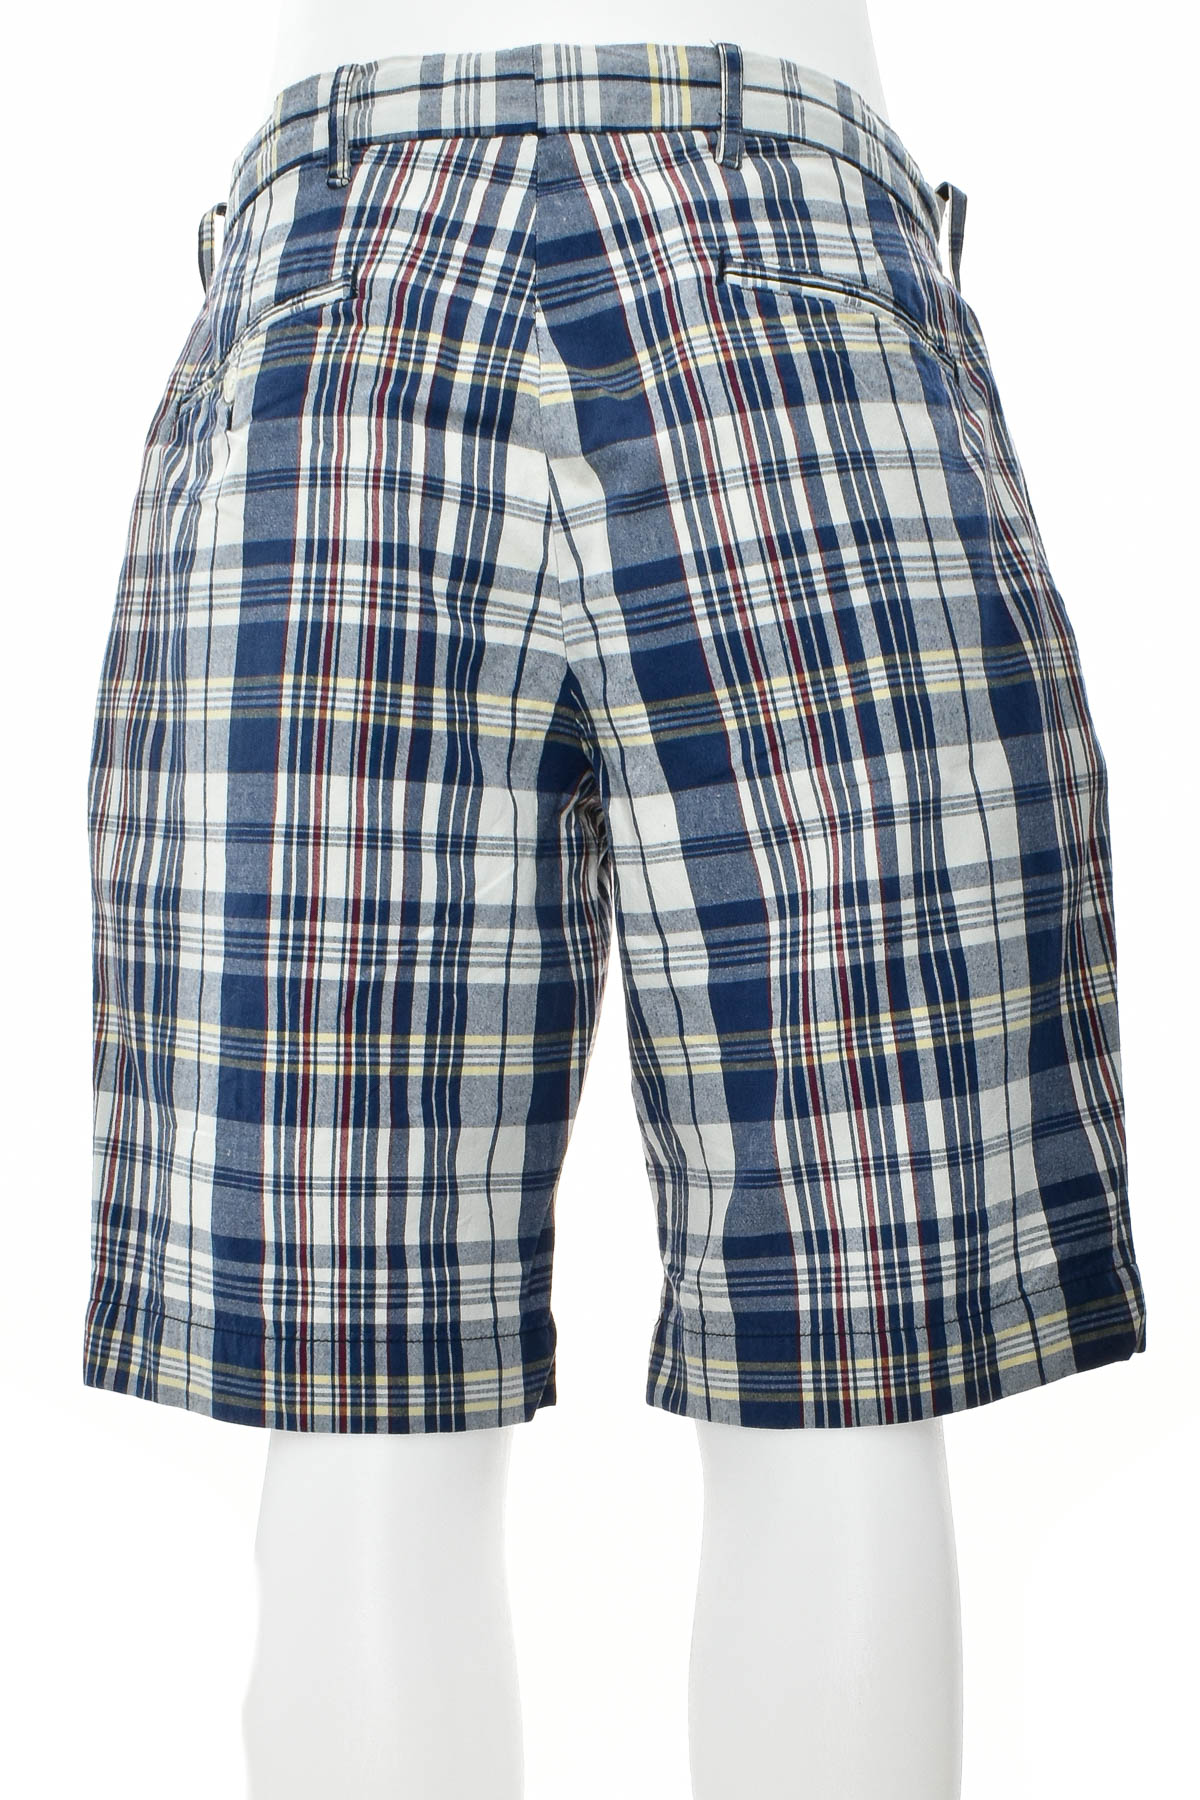 Men's shorts - Polo by Ralph Lauren - 1